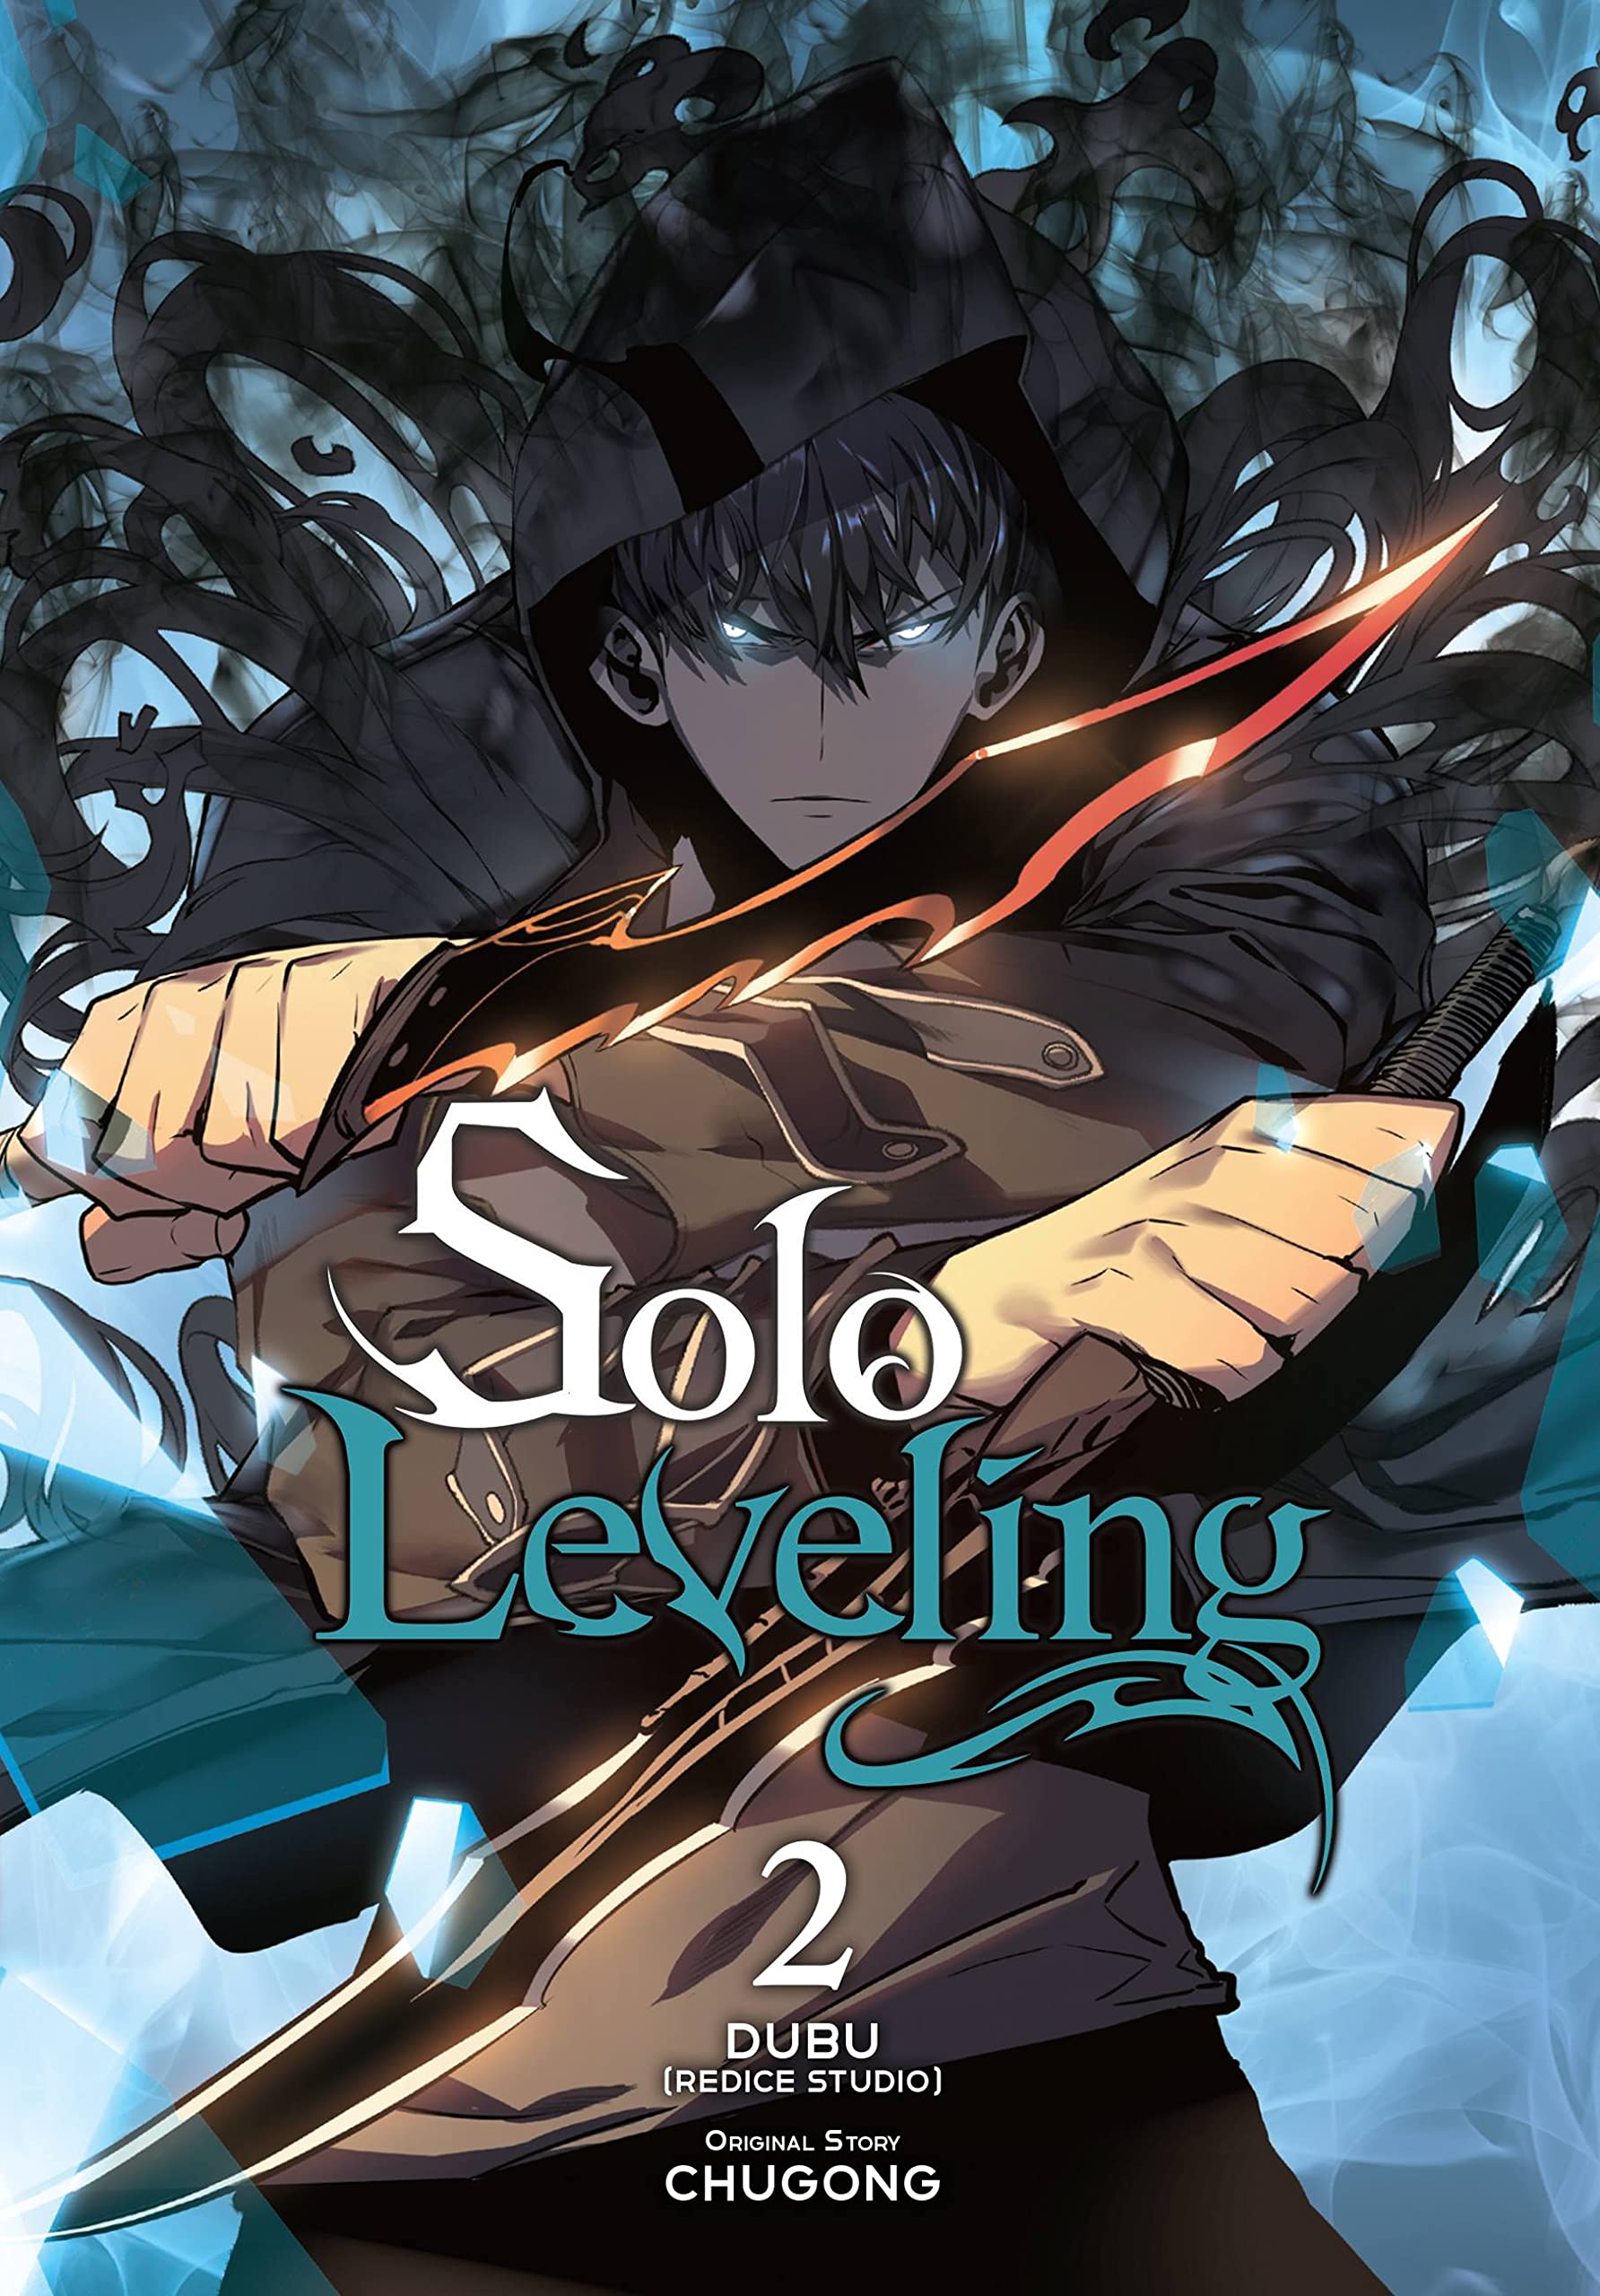 Solo Leveling, Vol. 2 (comic) (Solo Leveling (comic), 2)